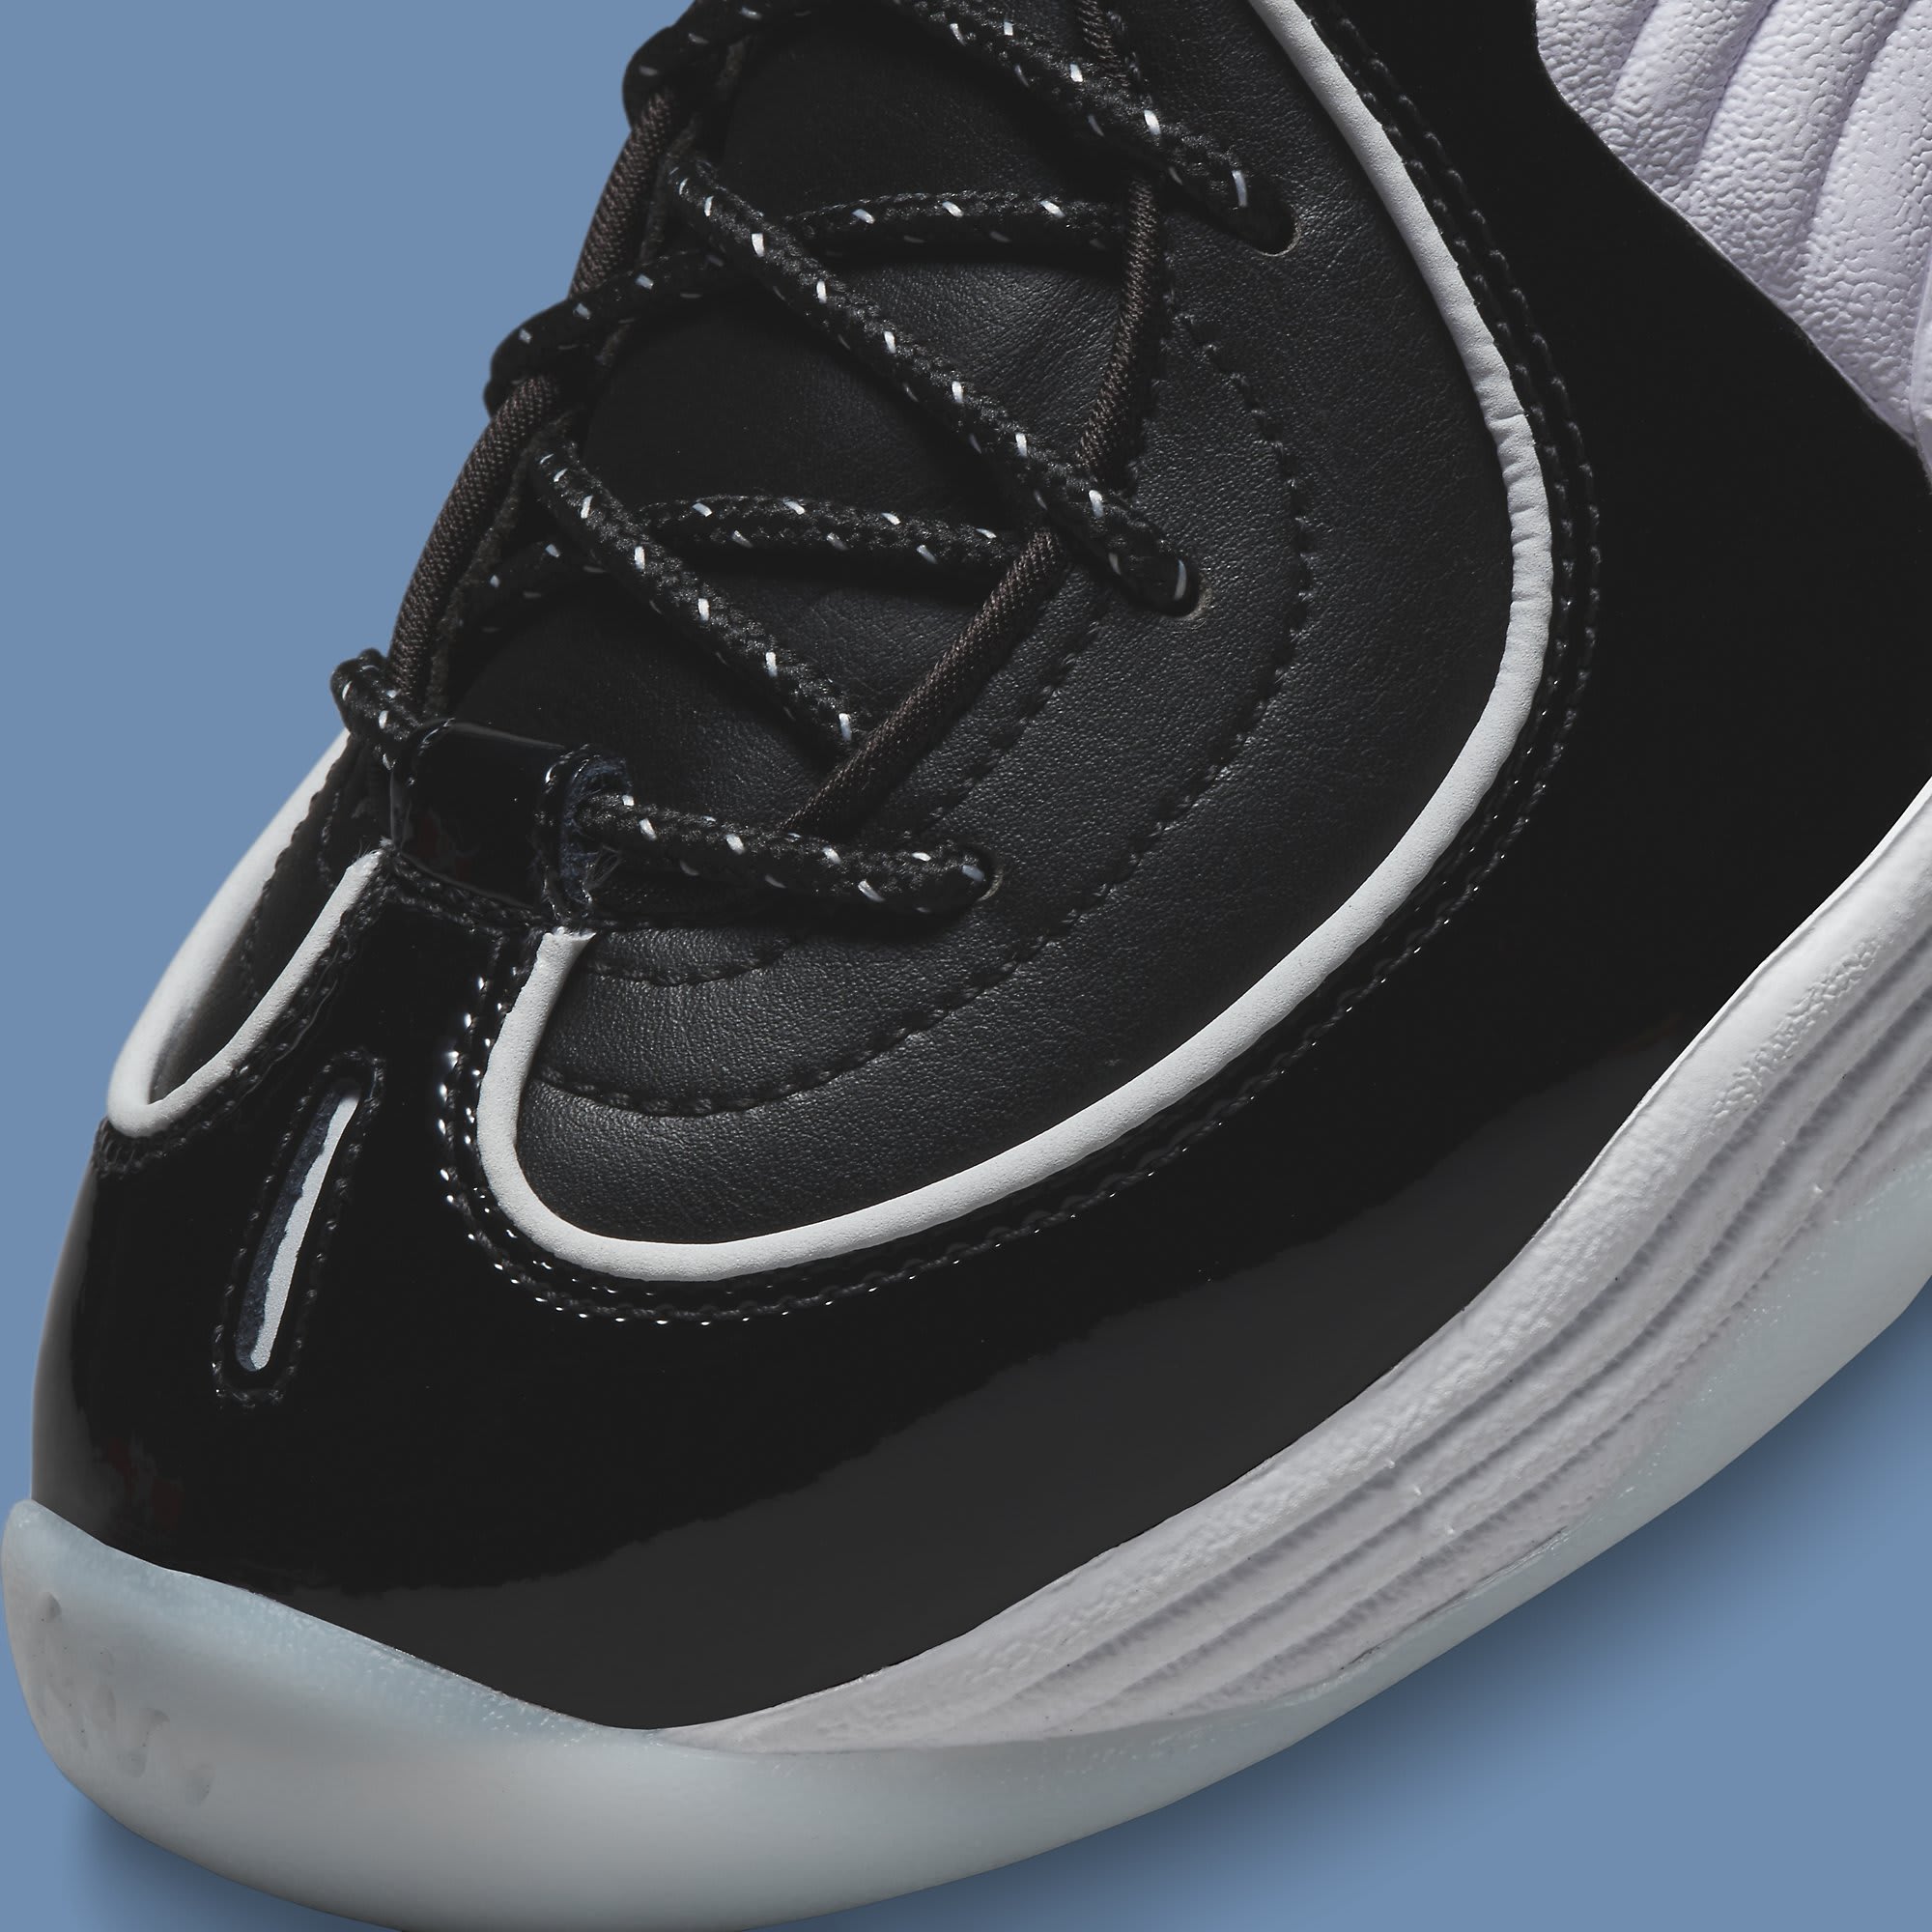 Nike Air Penny 2 II Football Grey DV0817-001 Toe Detail